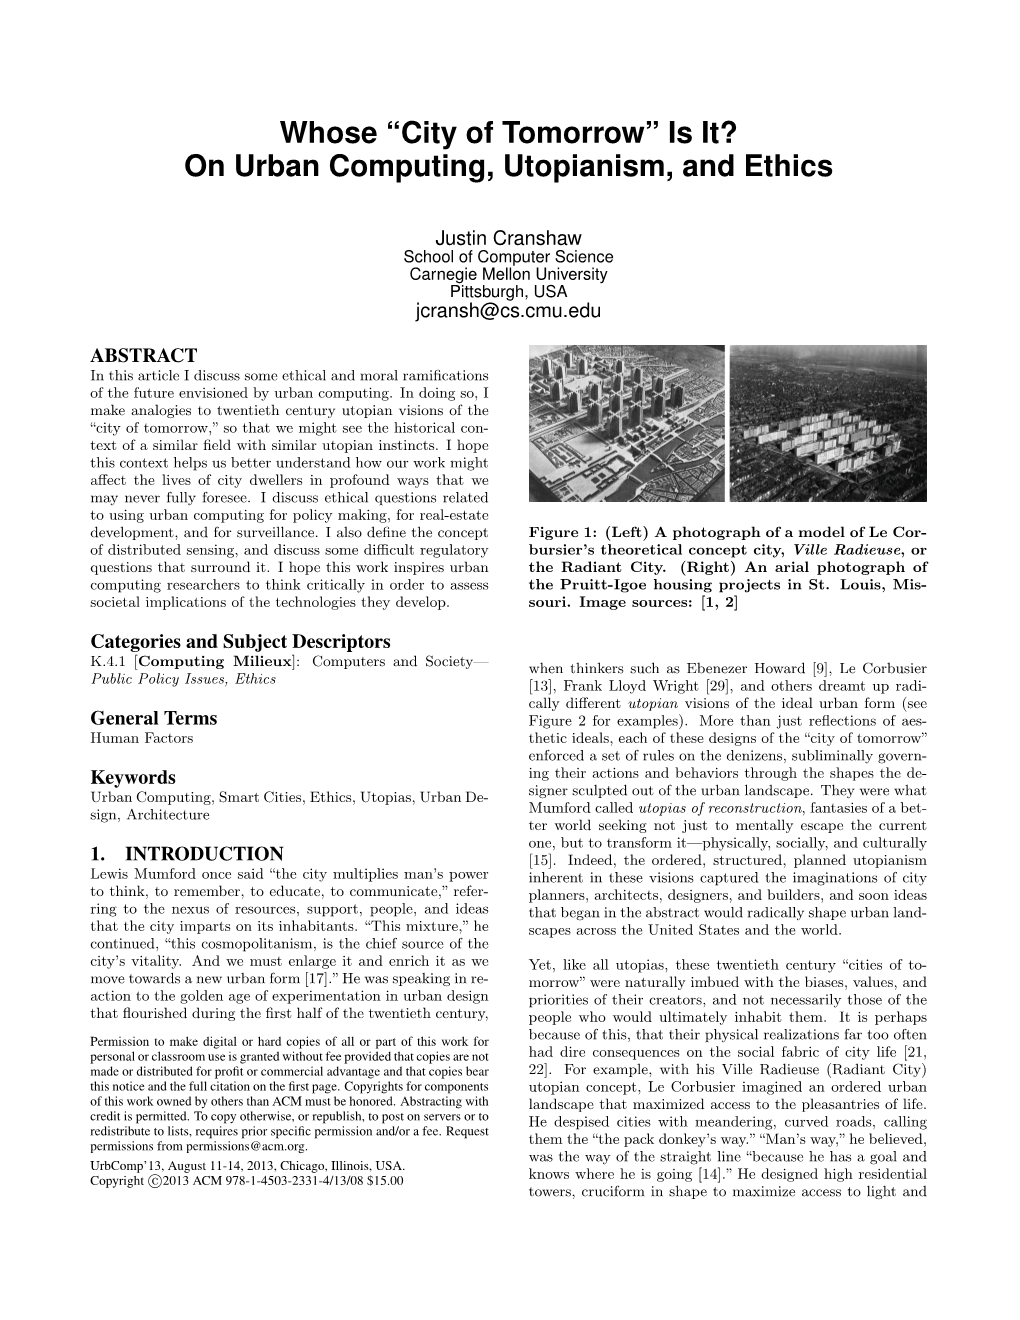 “City of Tomorrow” Is It? on Urban Computing, Utopianism, and Ethics